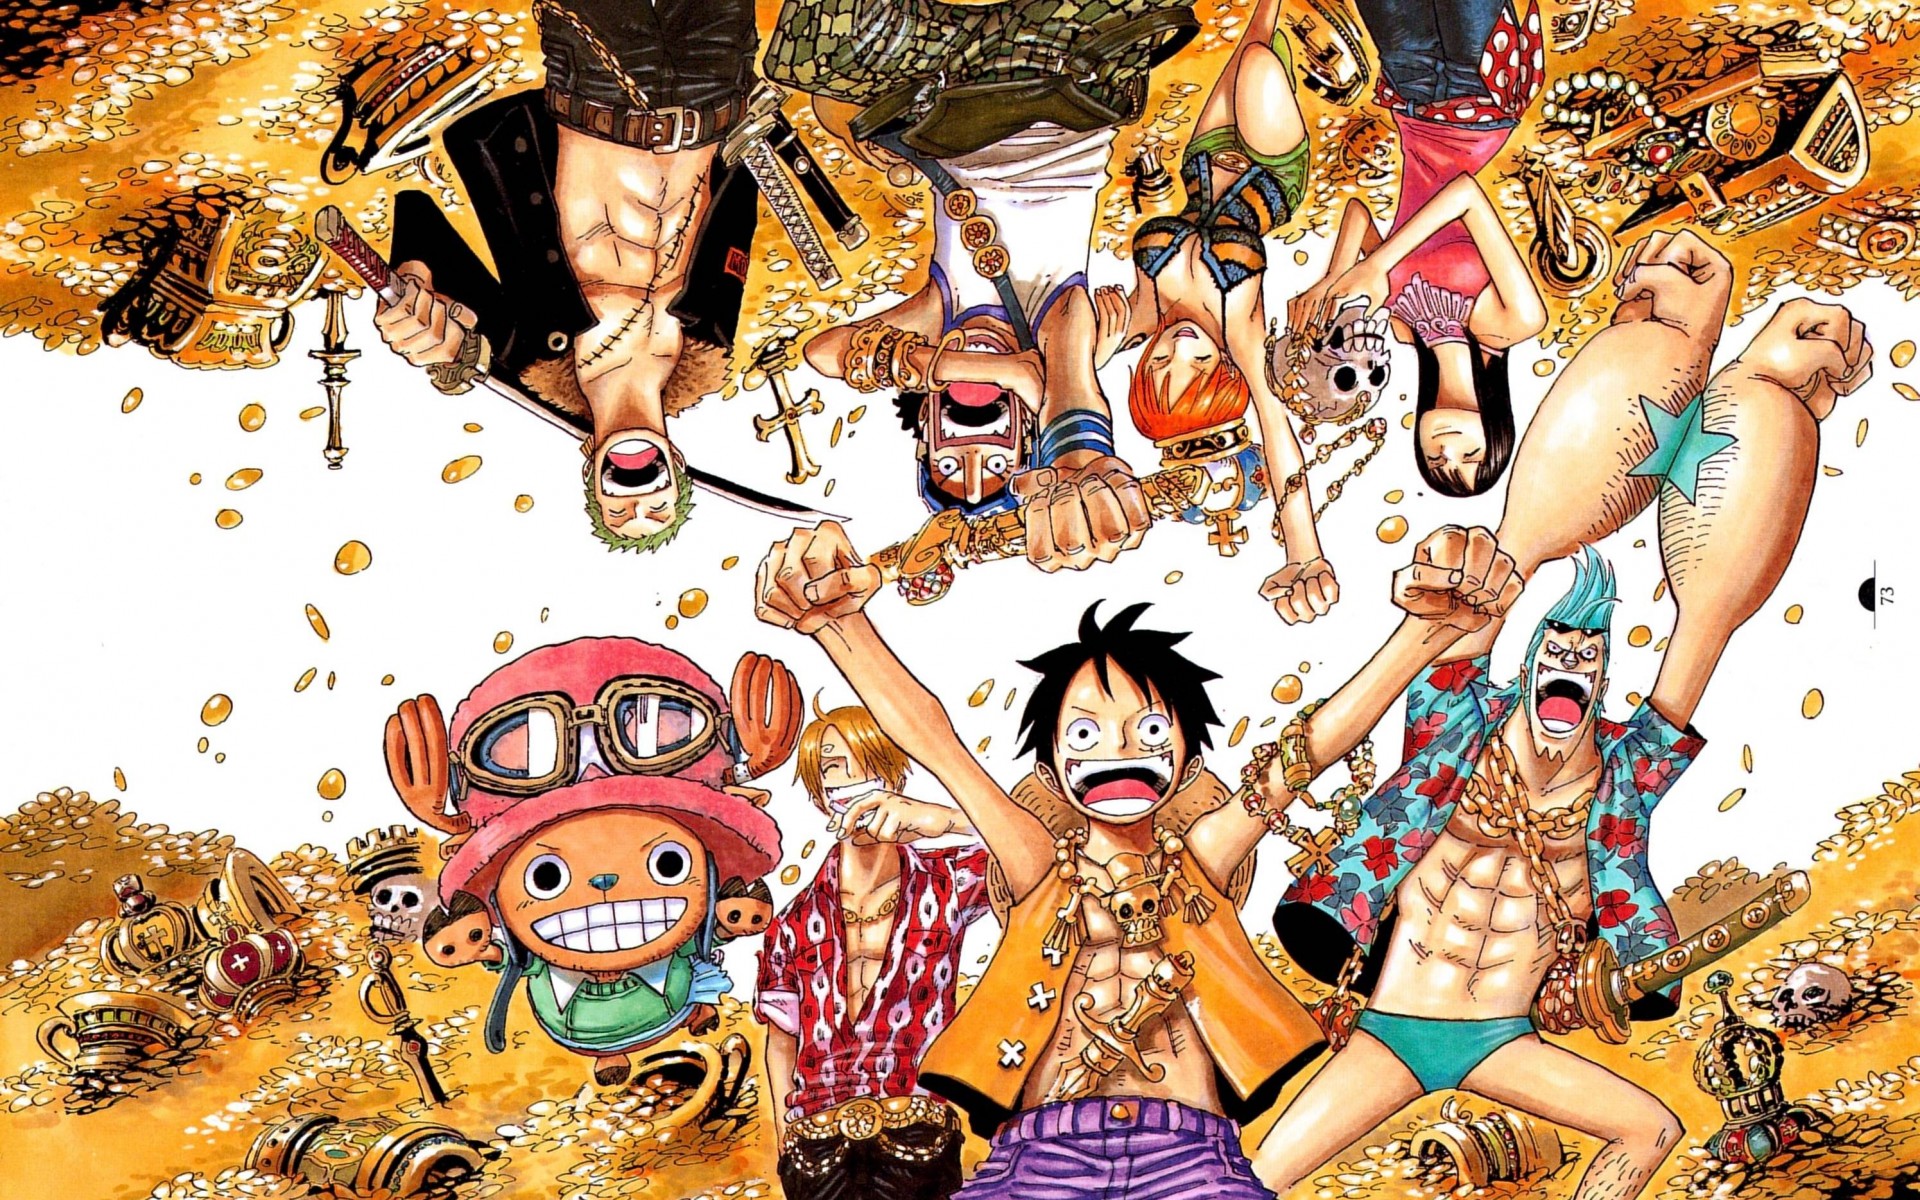 [75+] One Piece Hd Wallpapers on WallpaperSafari